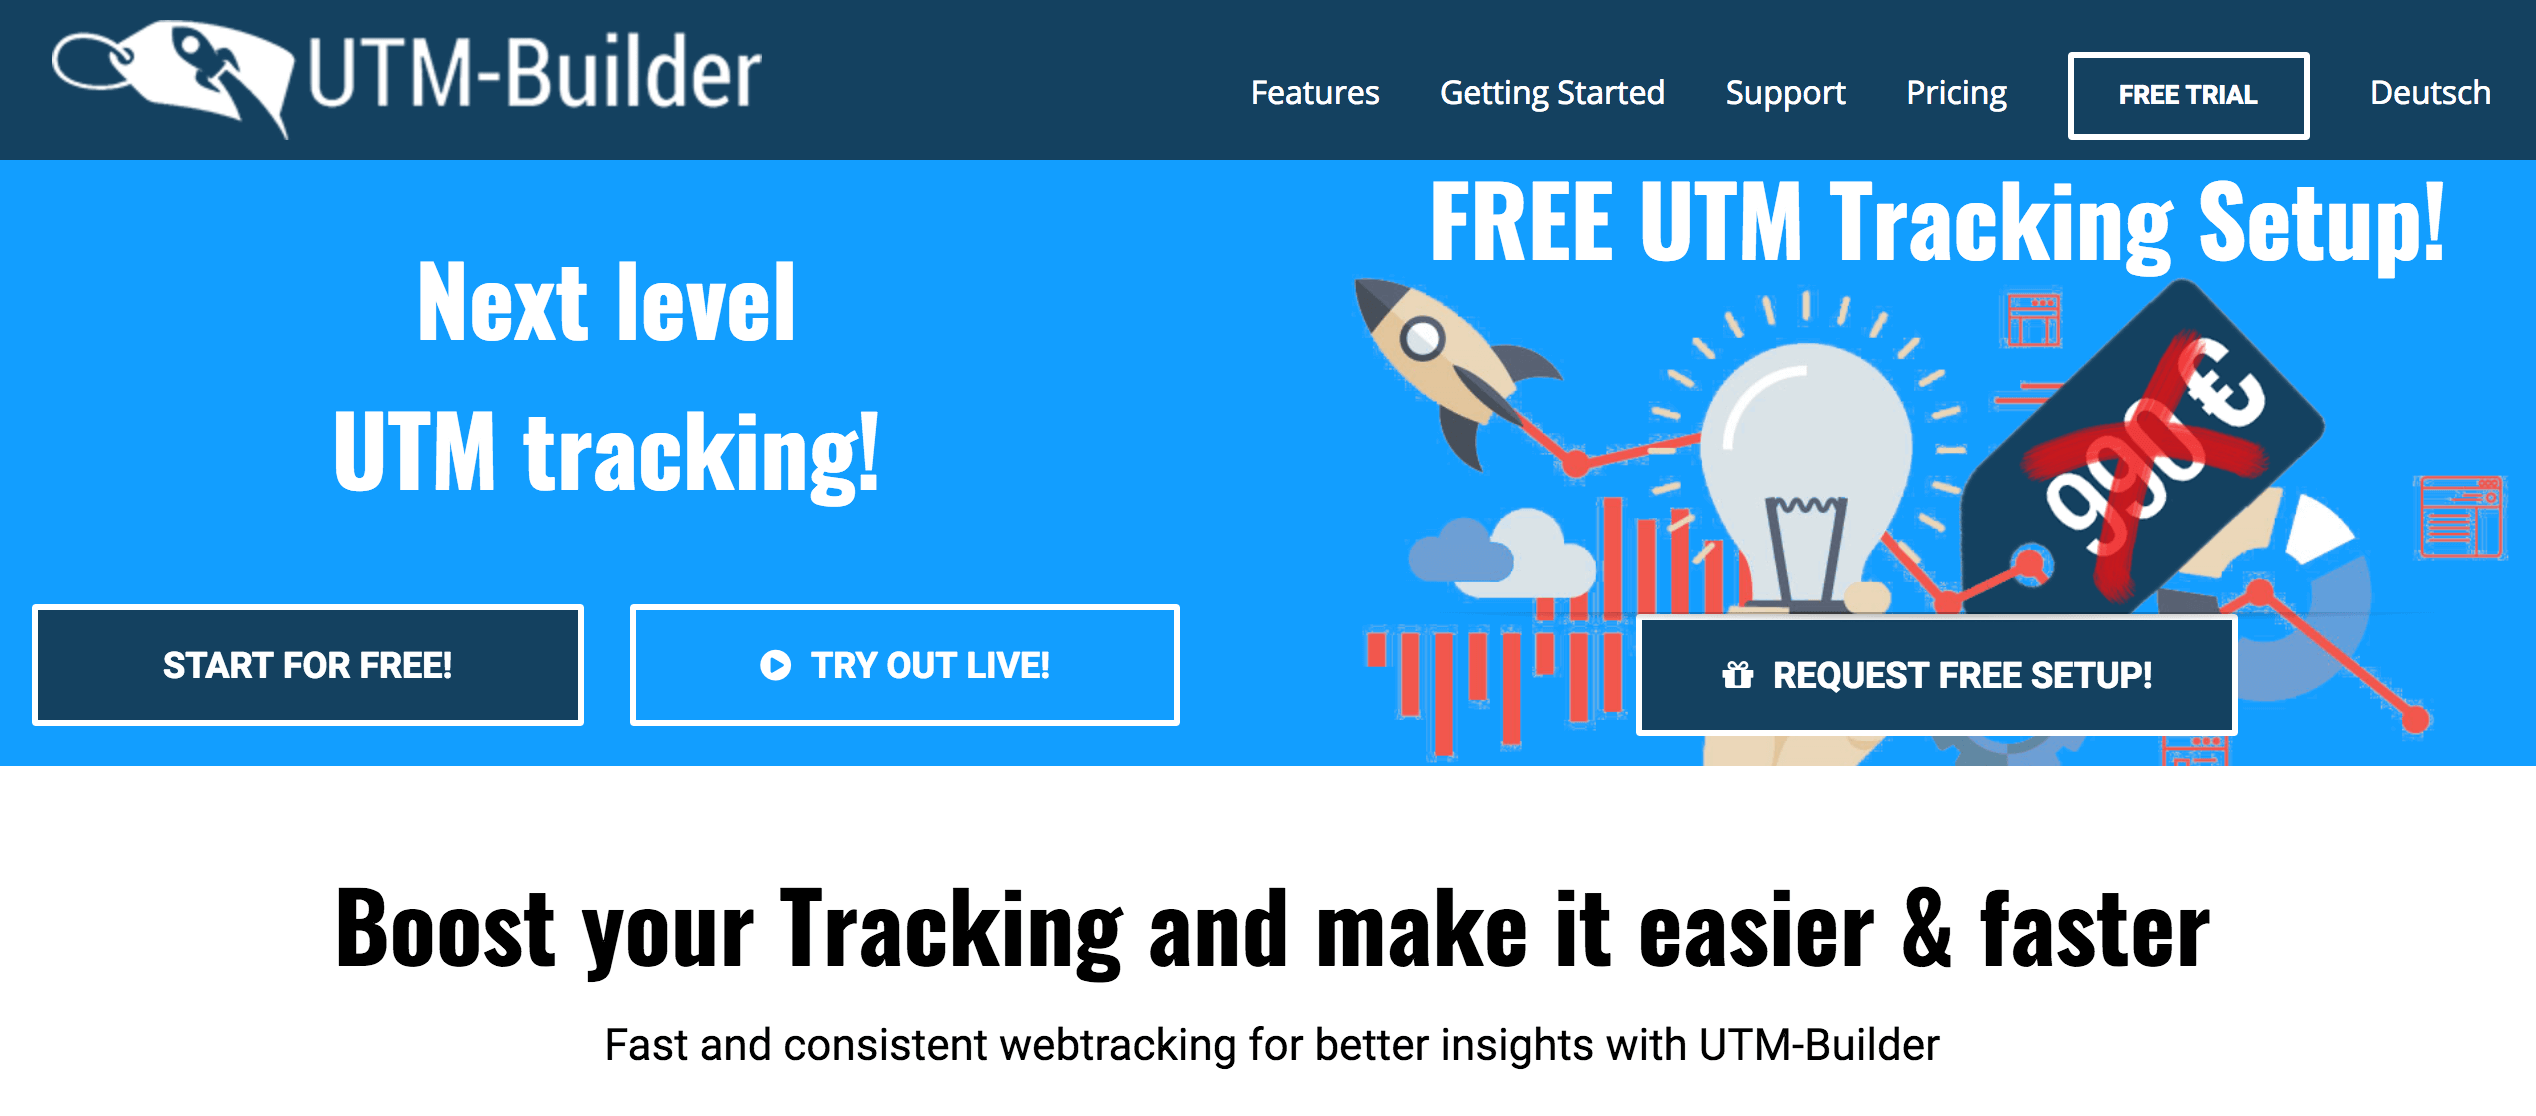 UTM Builder Tools: utm builder tool